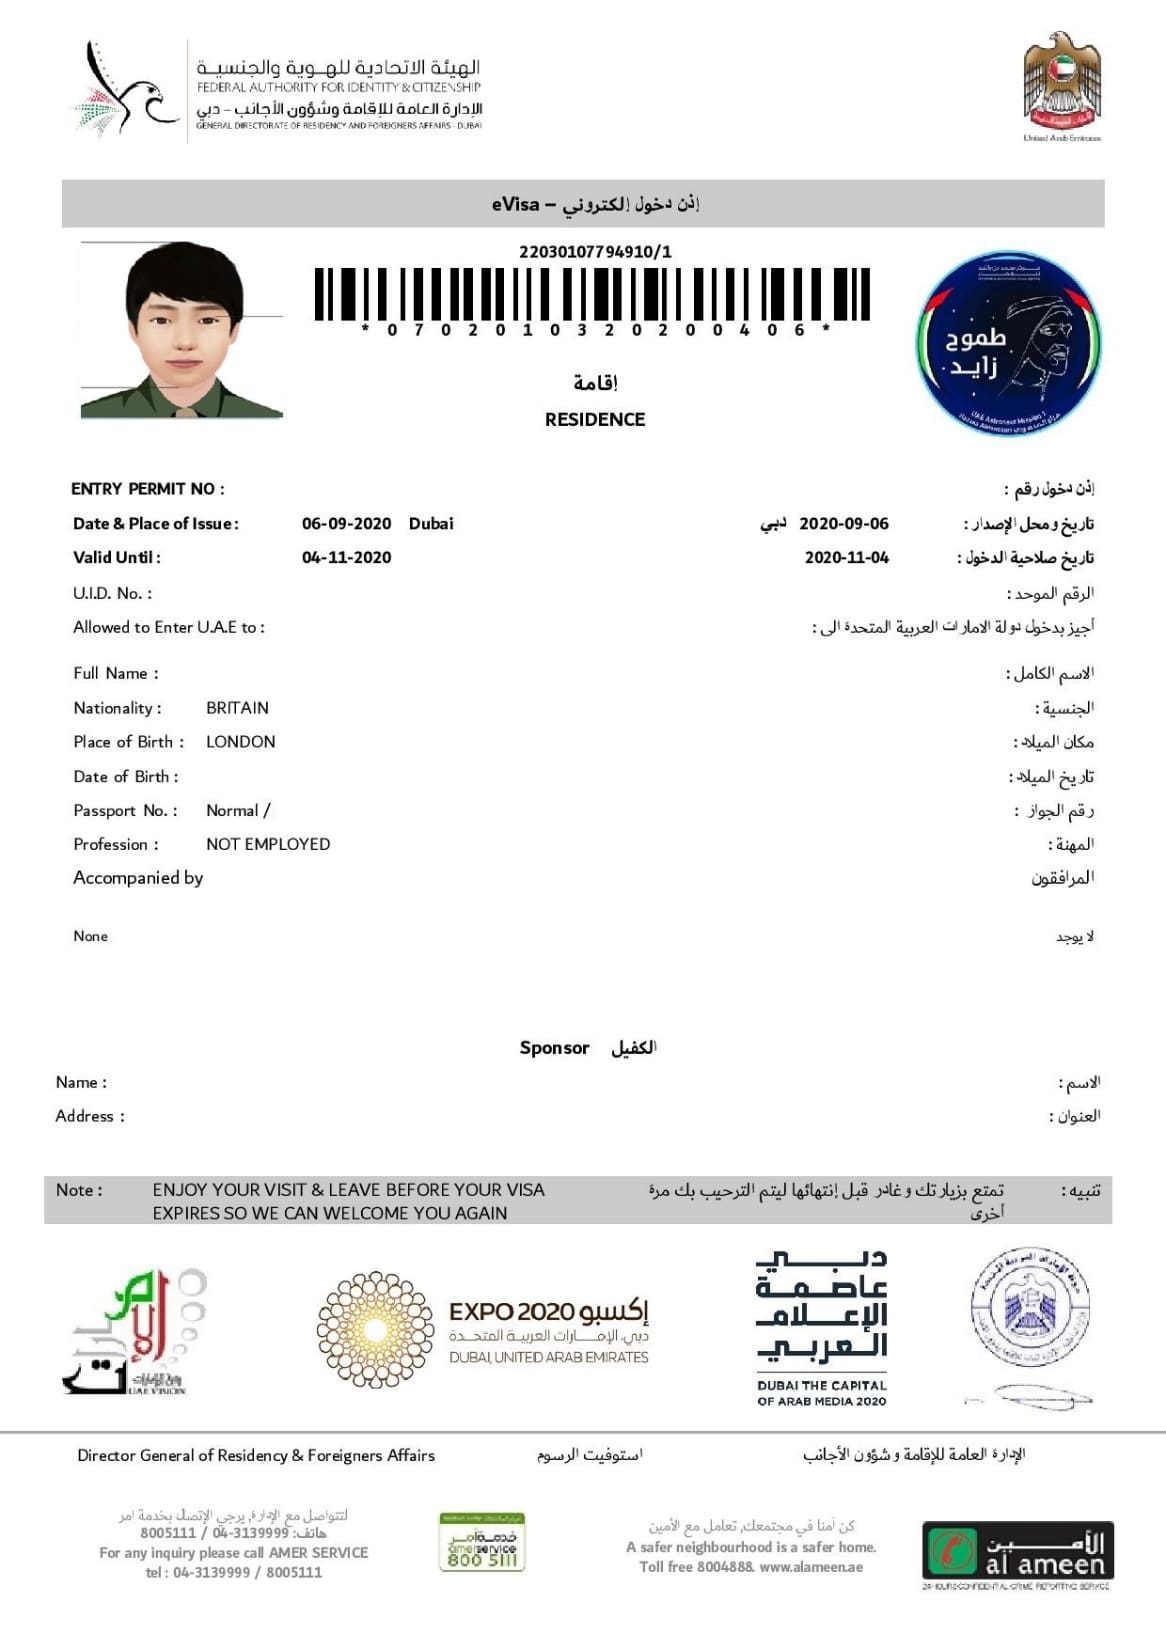 Sample Dubai residence entry permit 